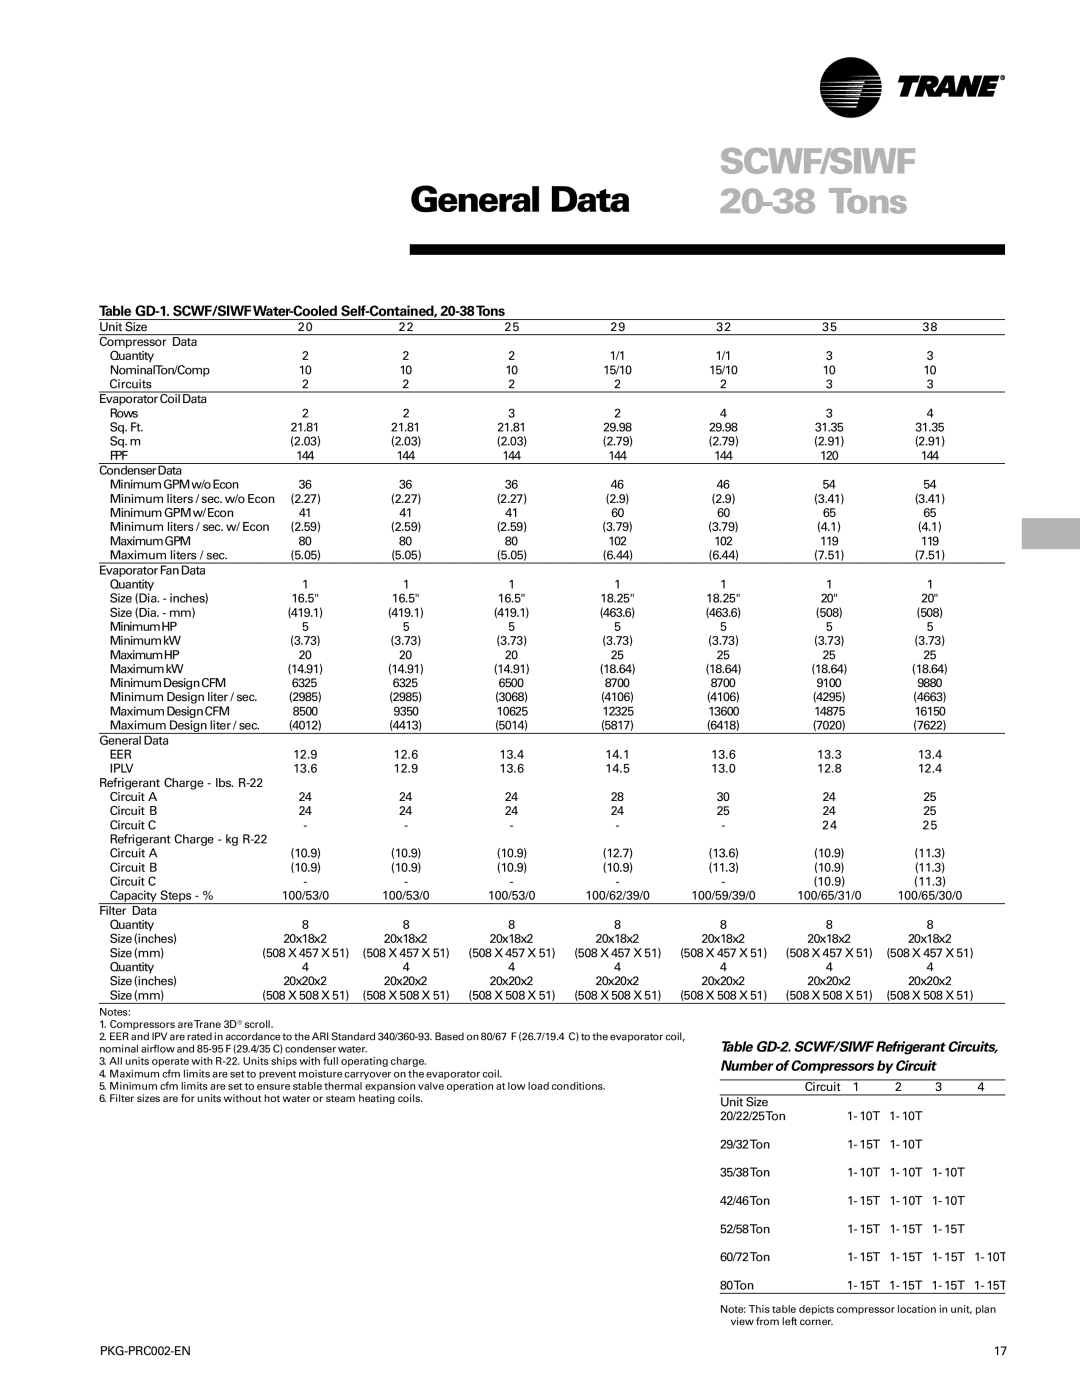 Trane PKG-PRC002-EN manual General Data, Tons 